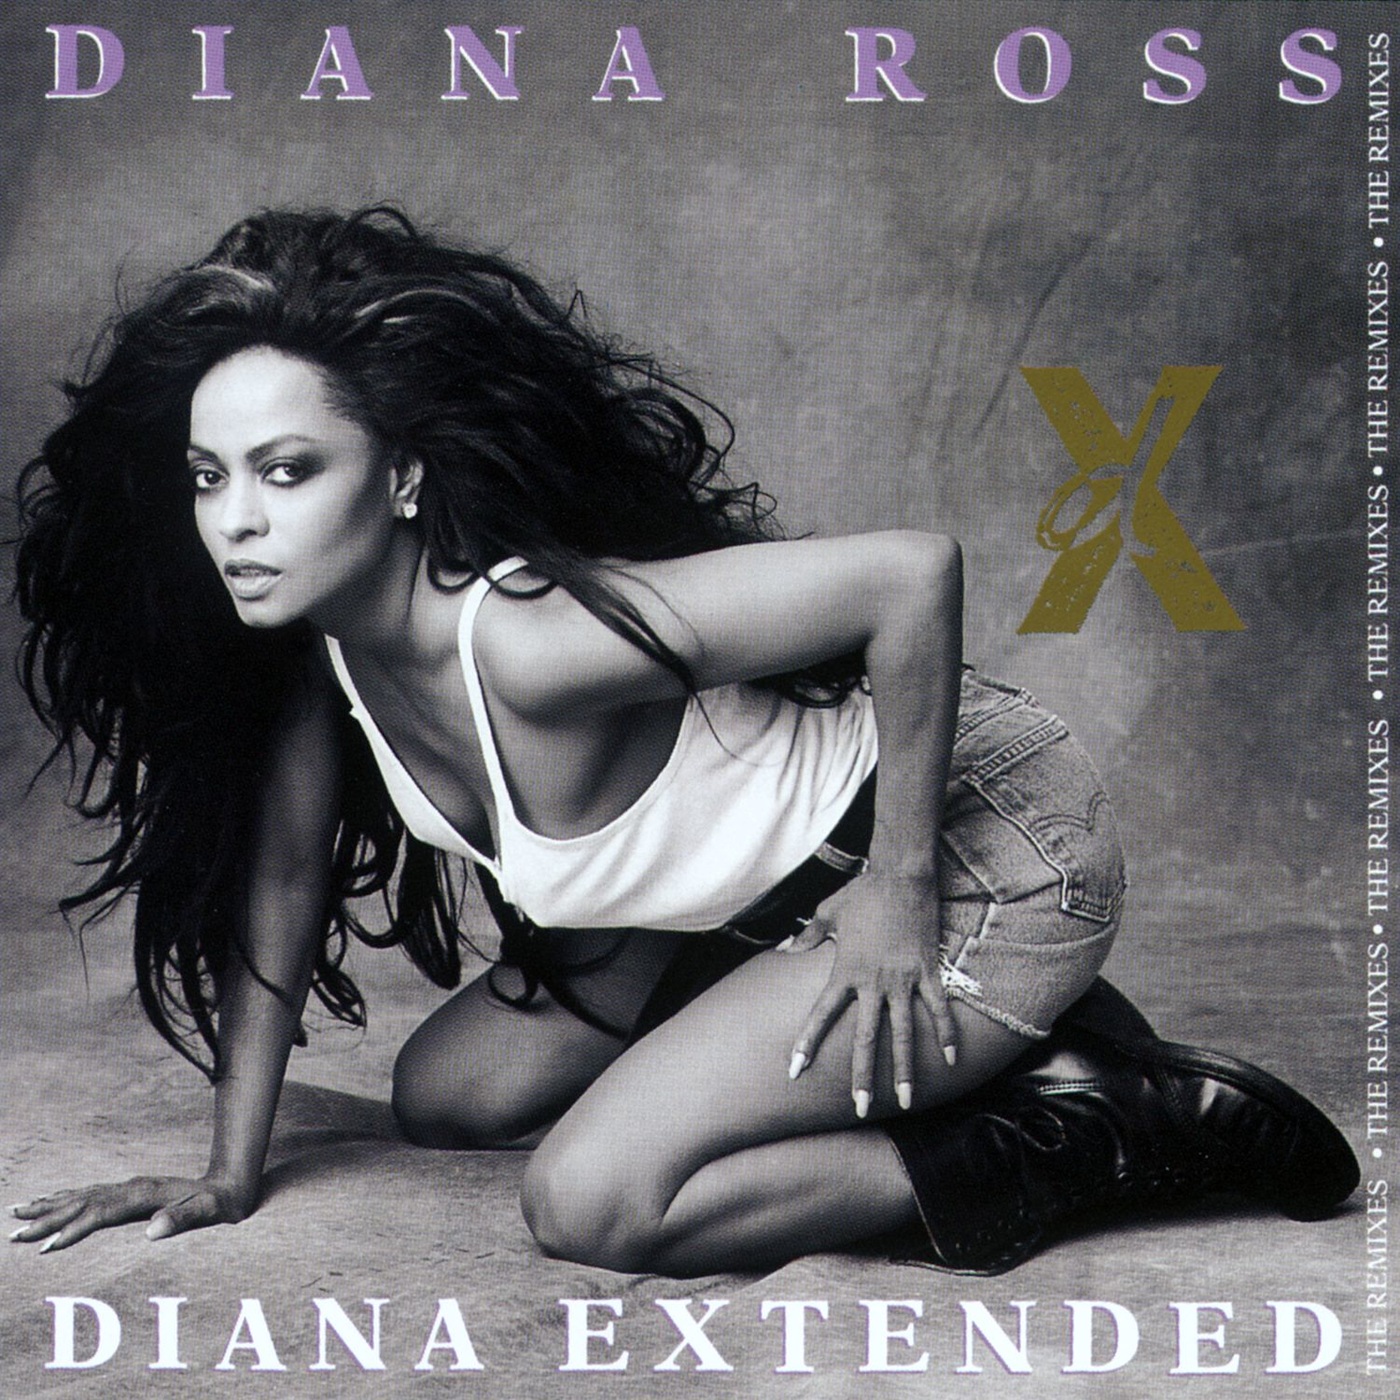 Diana Ross - Diana Extended - The Remixes / Parlophone UK